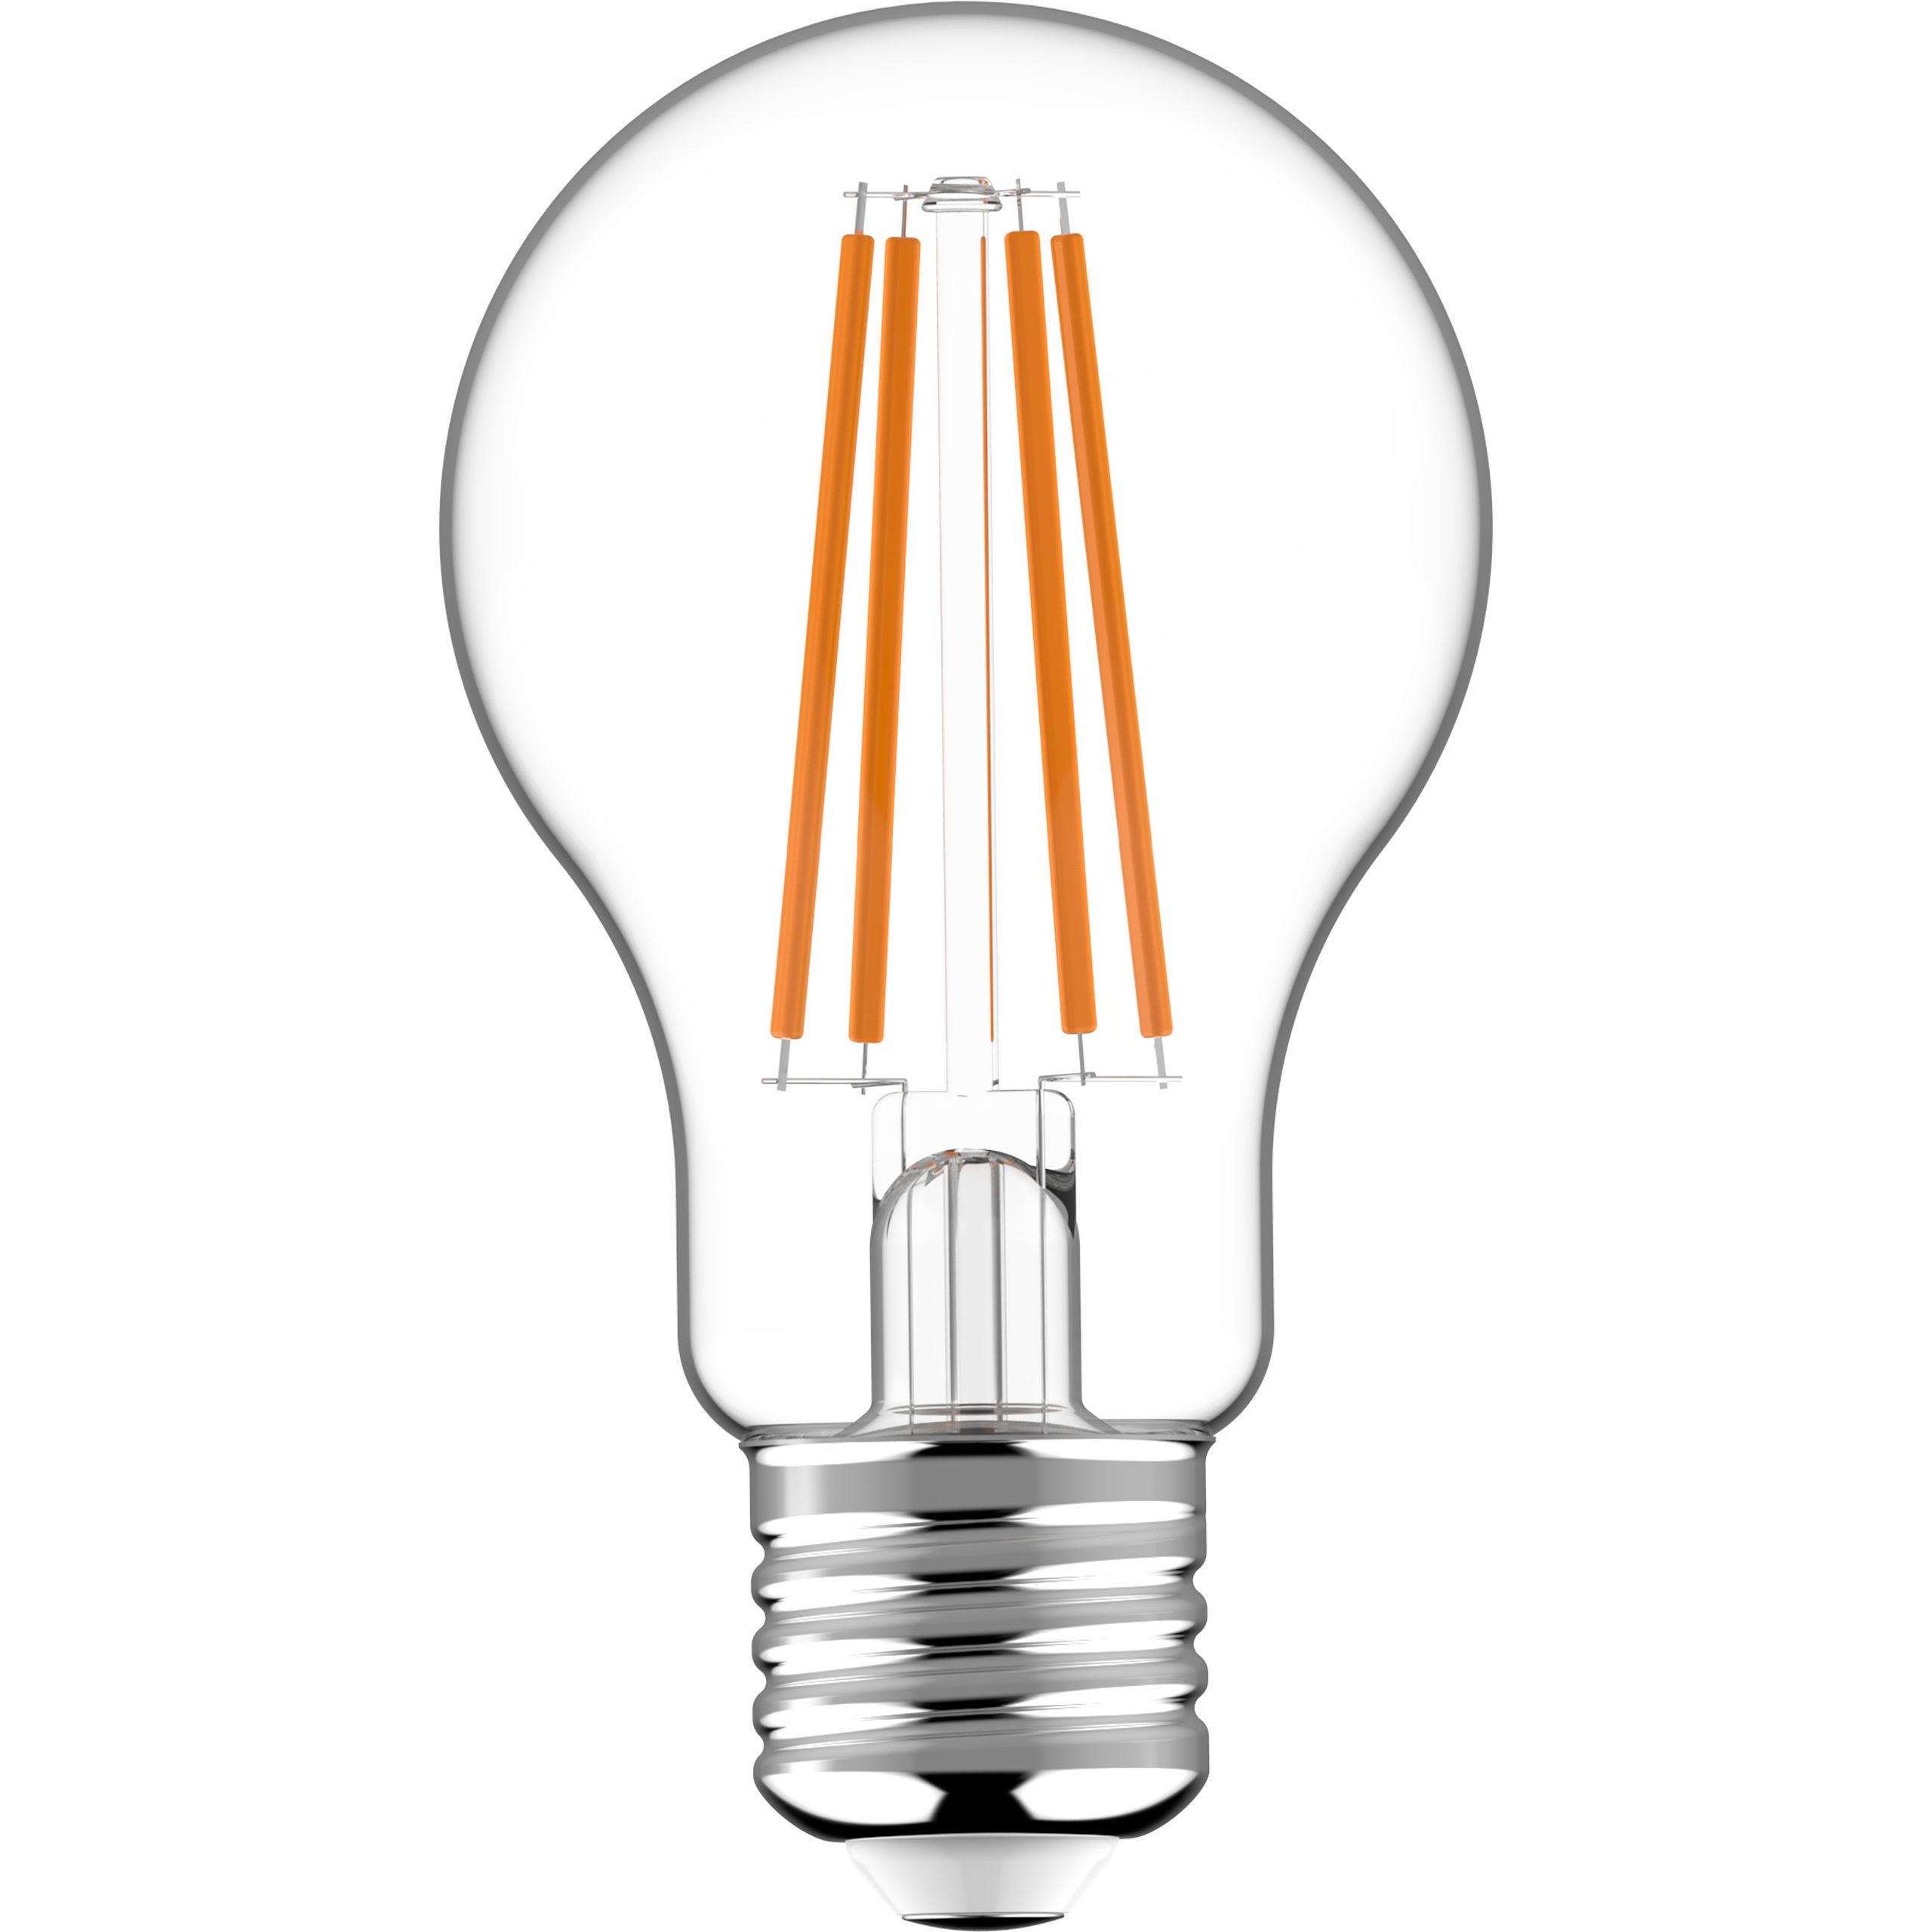 warmweiß 0620142 LED light A60 Klar E27 LED-Leuchtmittel E27, 7W Glühbirne, LED's